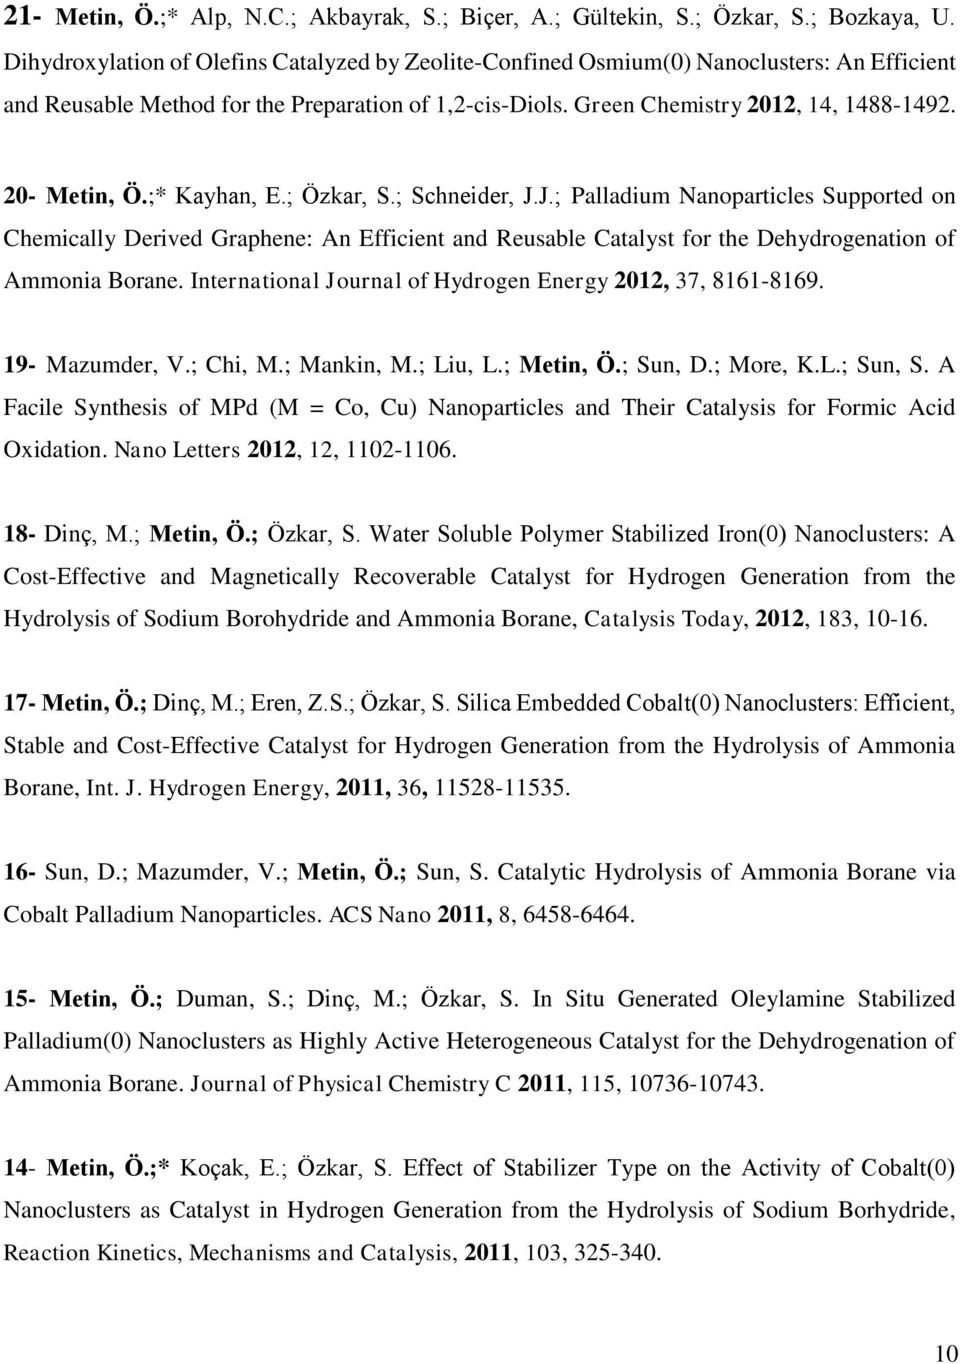 20- Metin, Ö.;* Kayhan, E.; Özkar, S.; Schneider, J.J.; Palladium Nanoparticles Supported on Chemically Derived Graphene: An Efficient and Reusable Catalyst for the Dehydrogenation of Ammonia Borane.